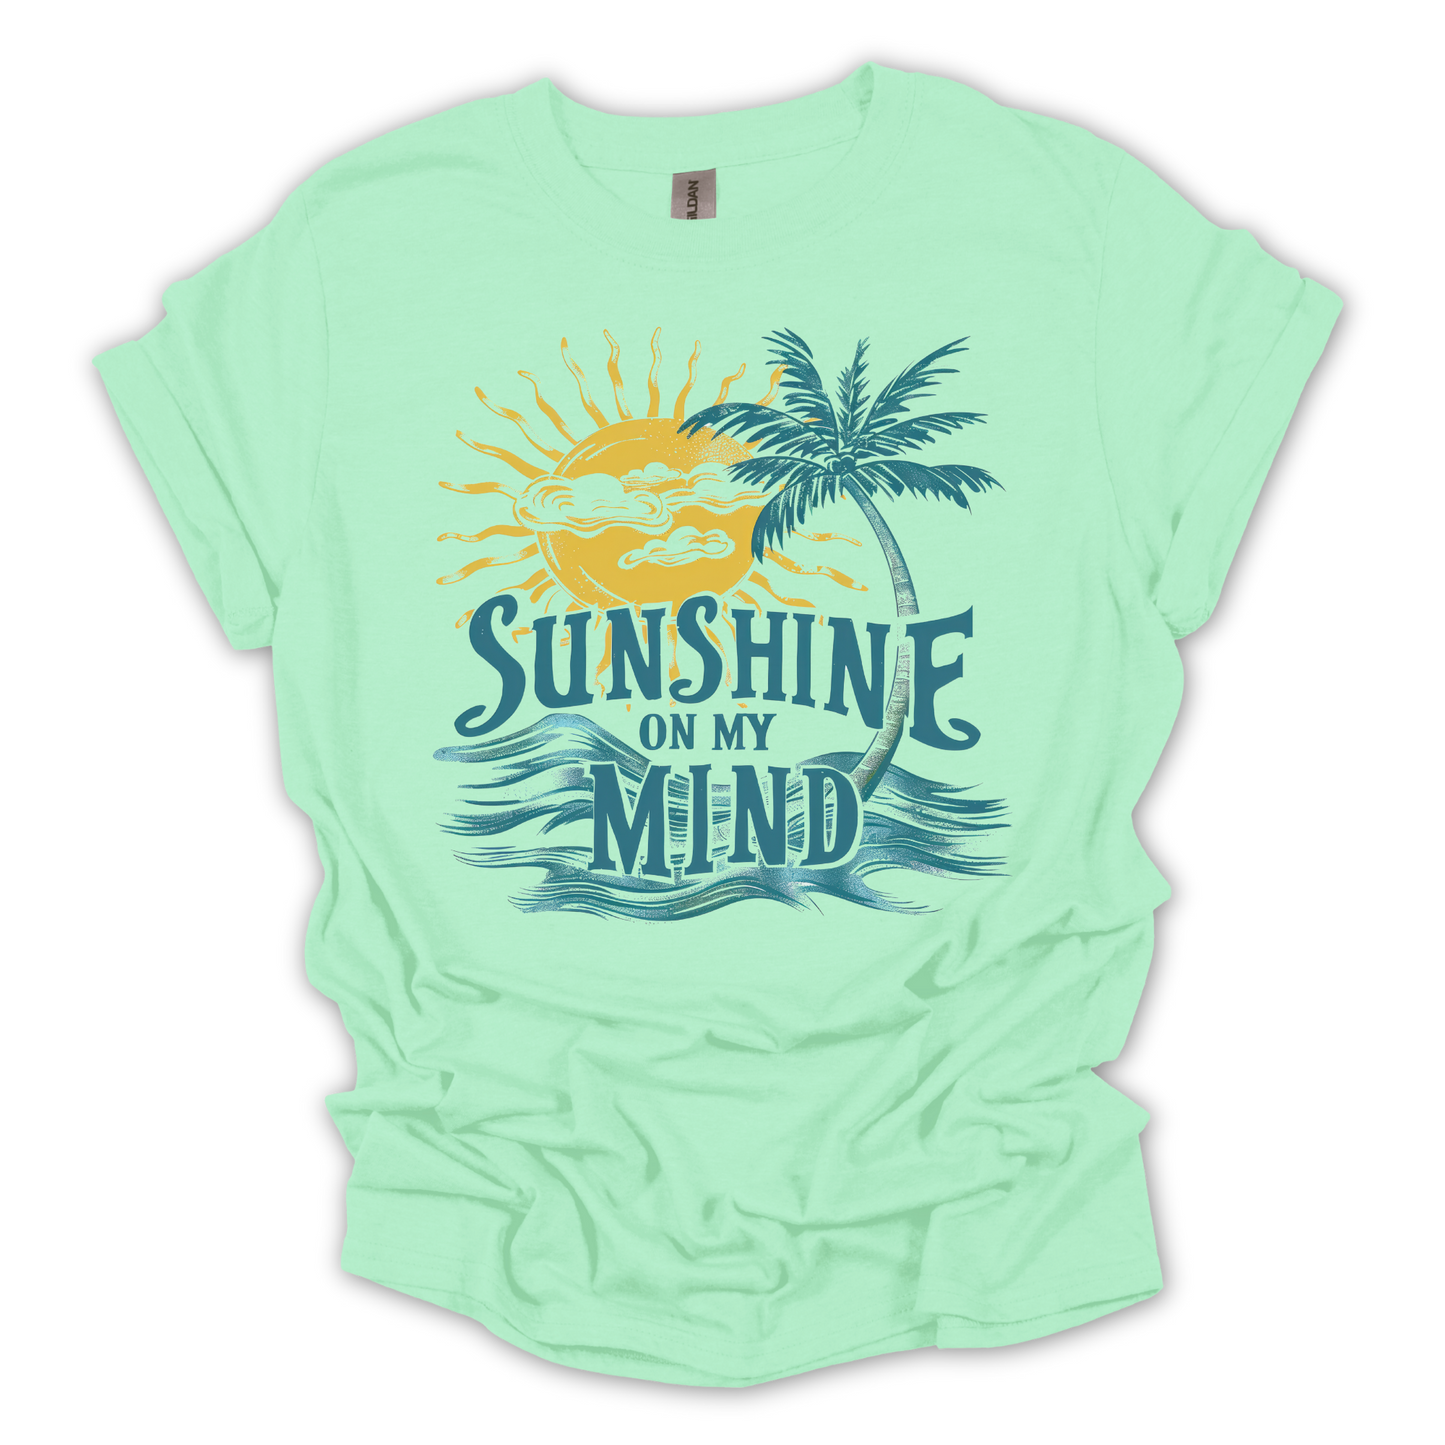 Sunshine on my mind graphic tee shirt